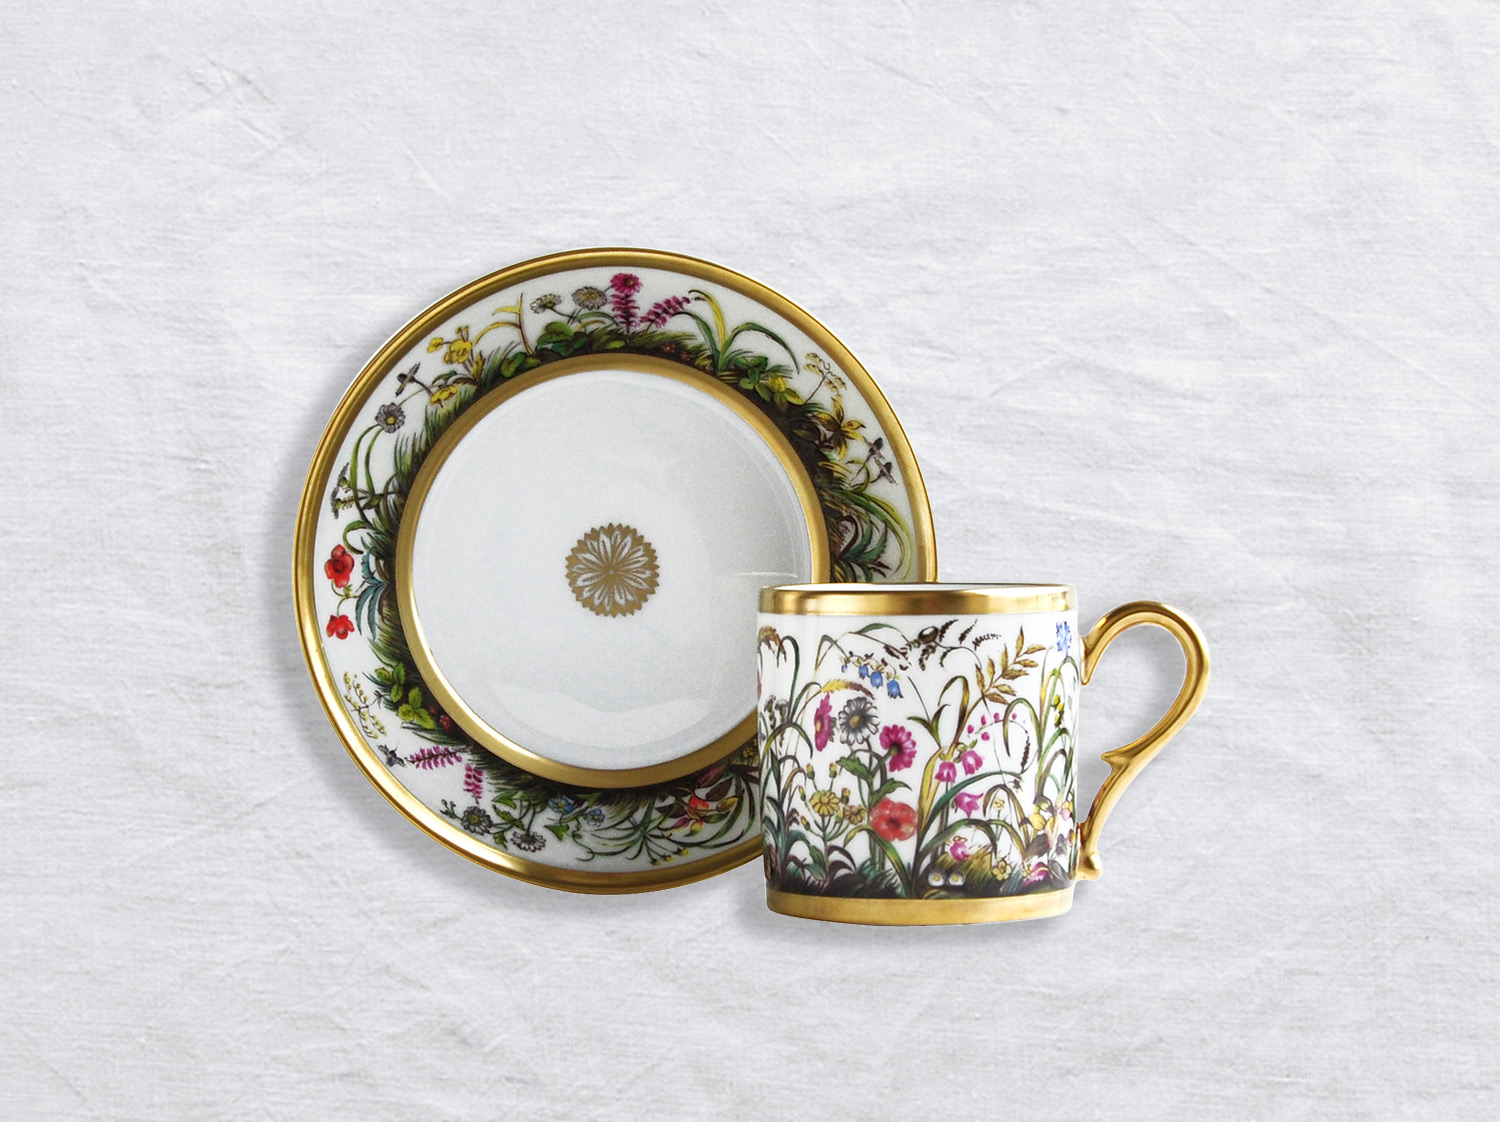 China Litron cup & saucer of the collection Aux fleurs des champs | Bernardaud